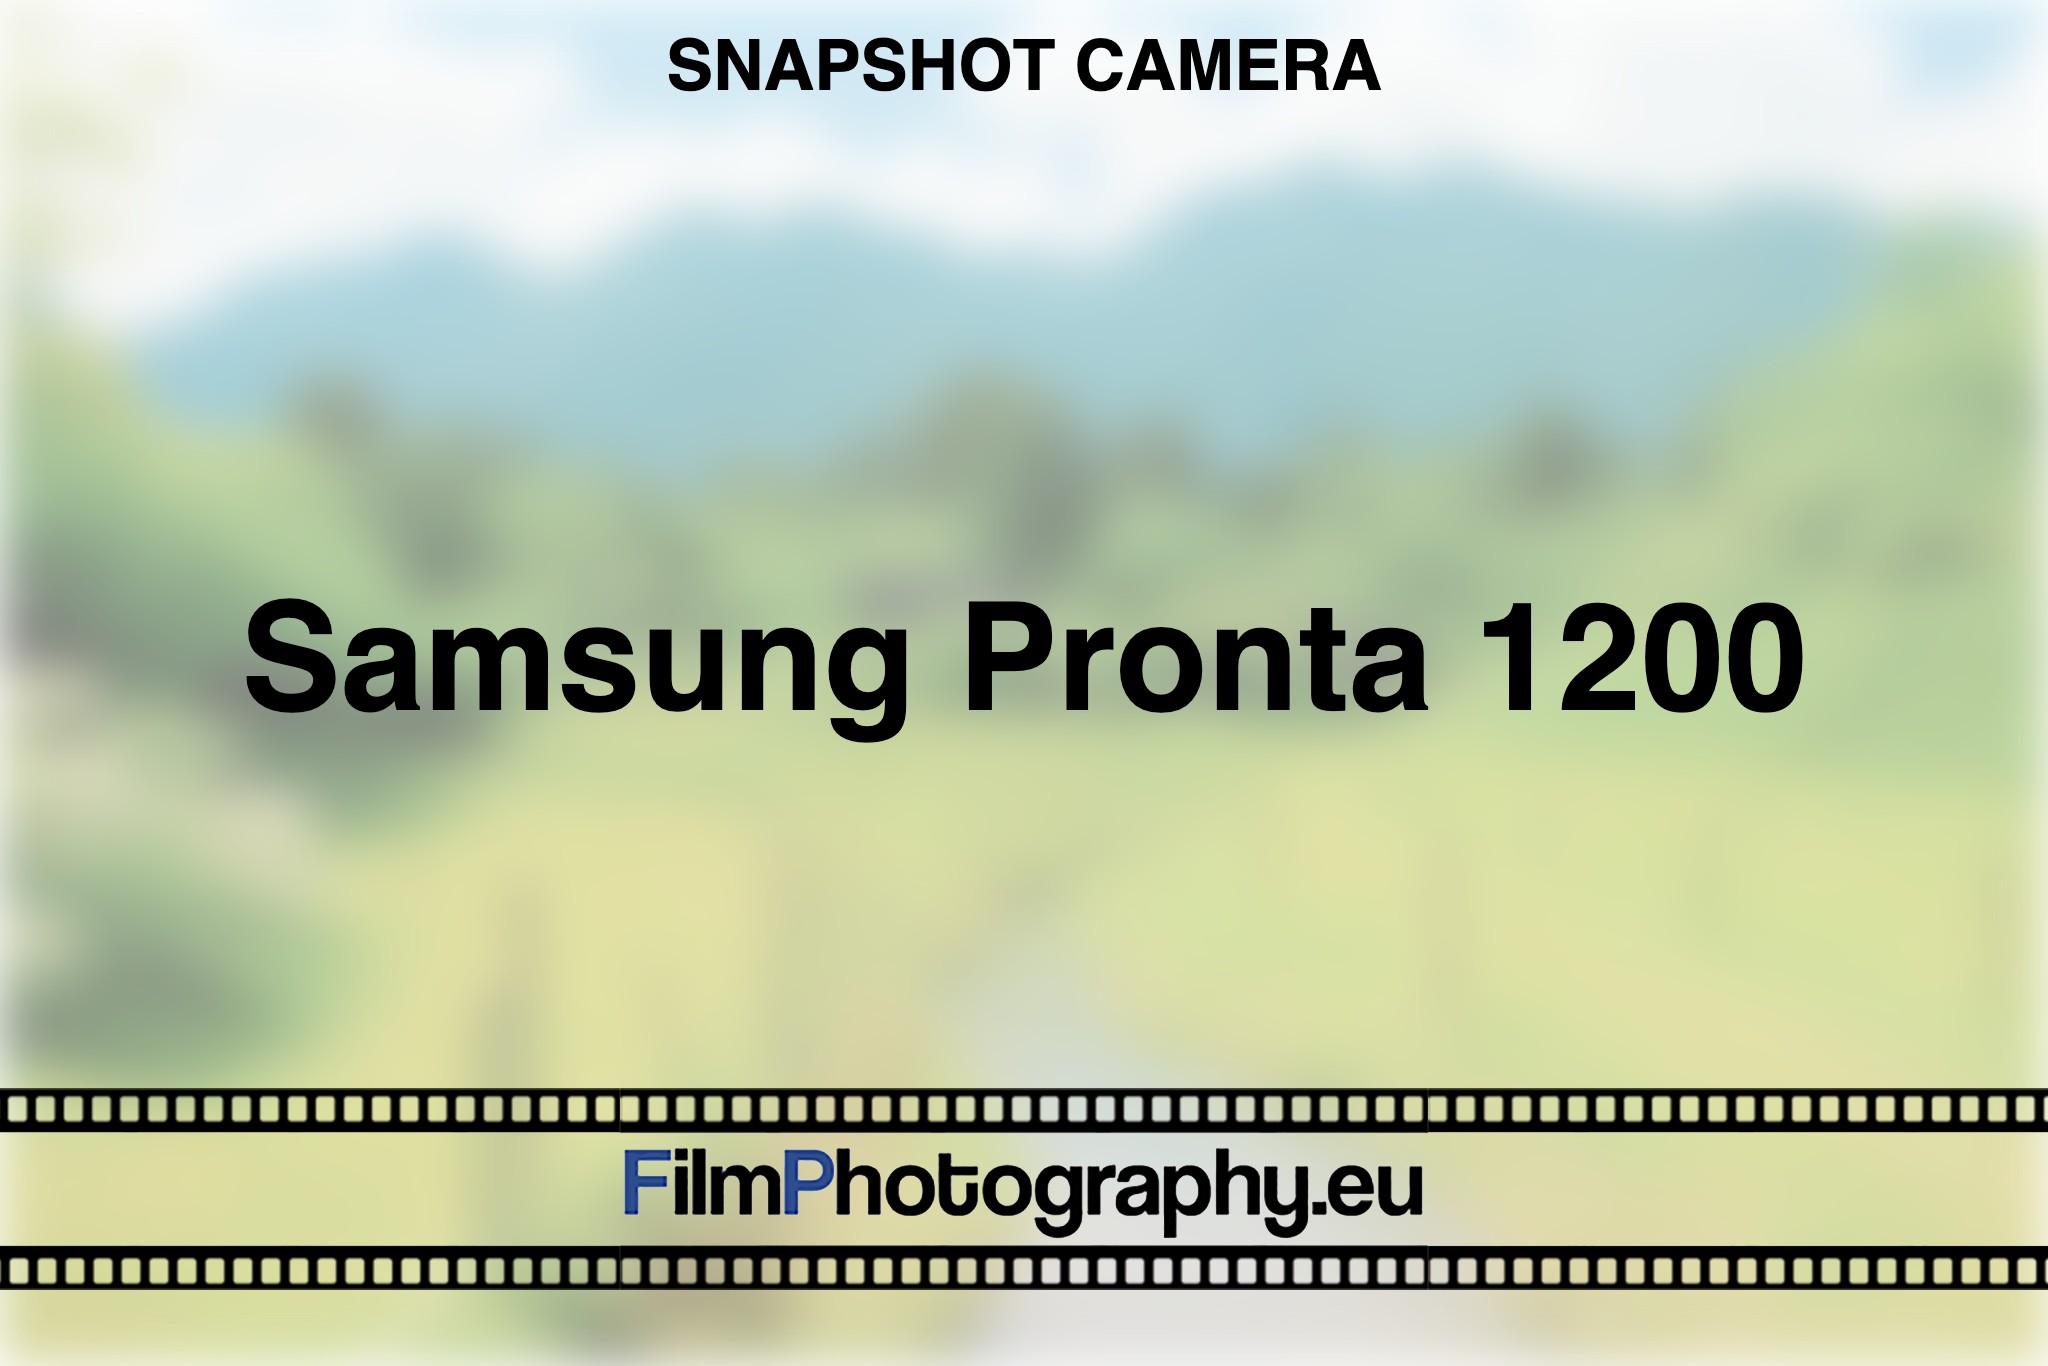 samsung-pronta-1200-snapshot-camera-bnv